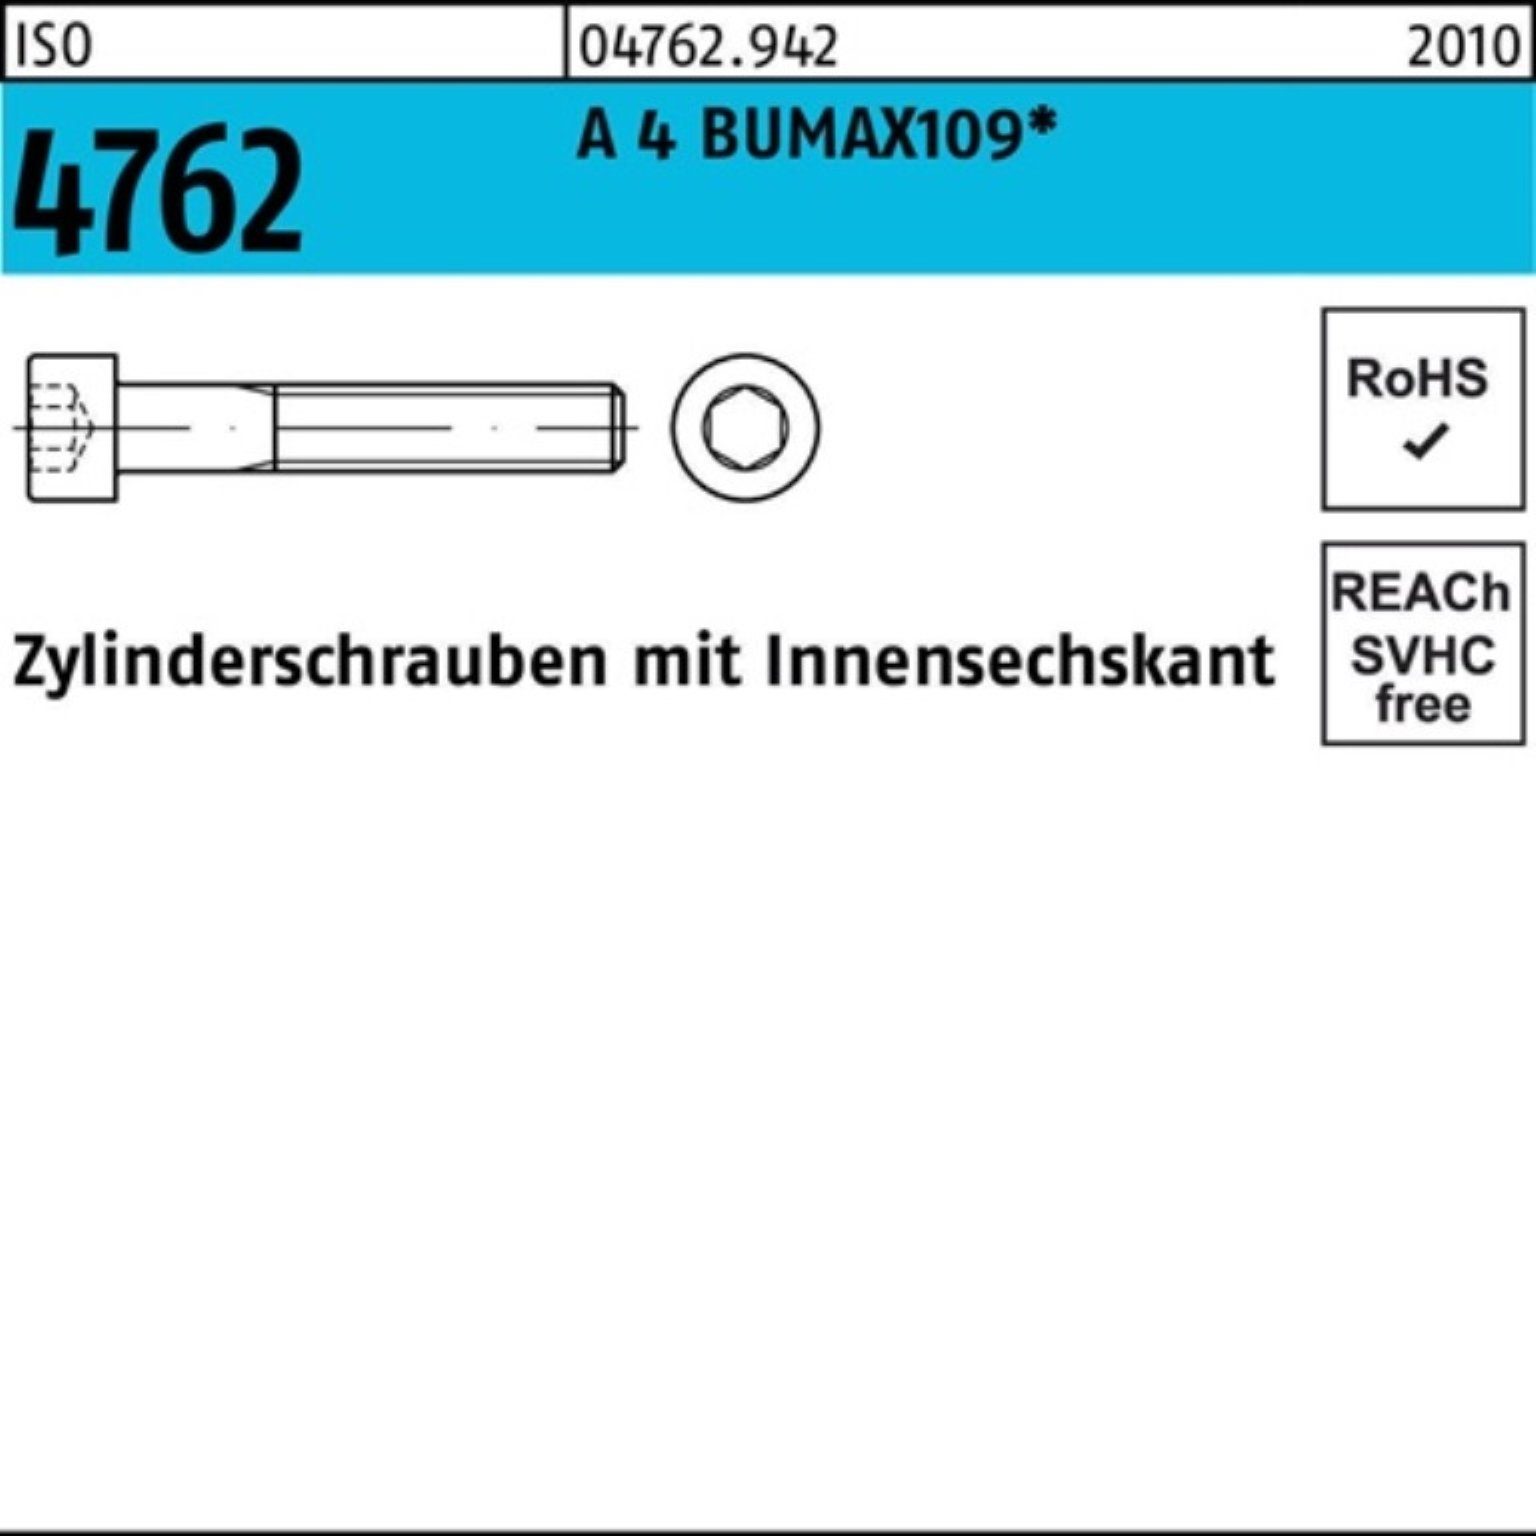 Zylinderschraube 4 4762 100er BUMAX109 ISO Innen-6kt M6x A 30 Bufab 100 Zylinderschraube Pack